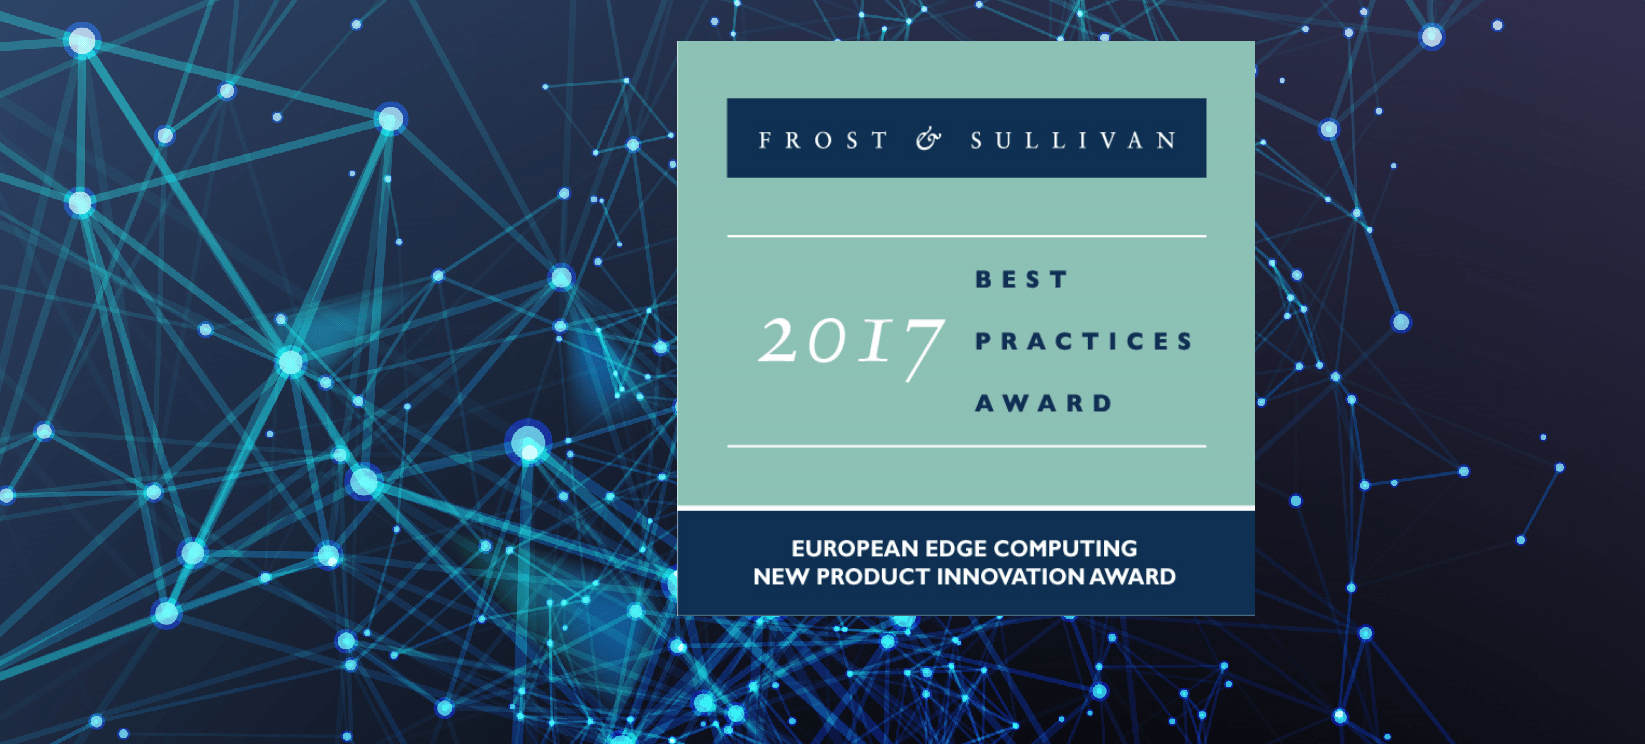 Press ReleaseFS 2017 award_New